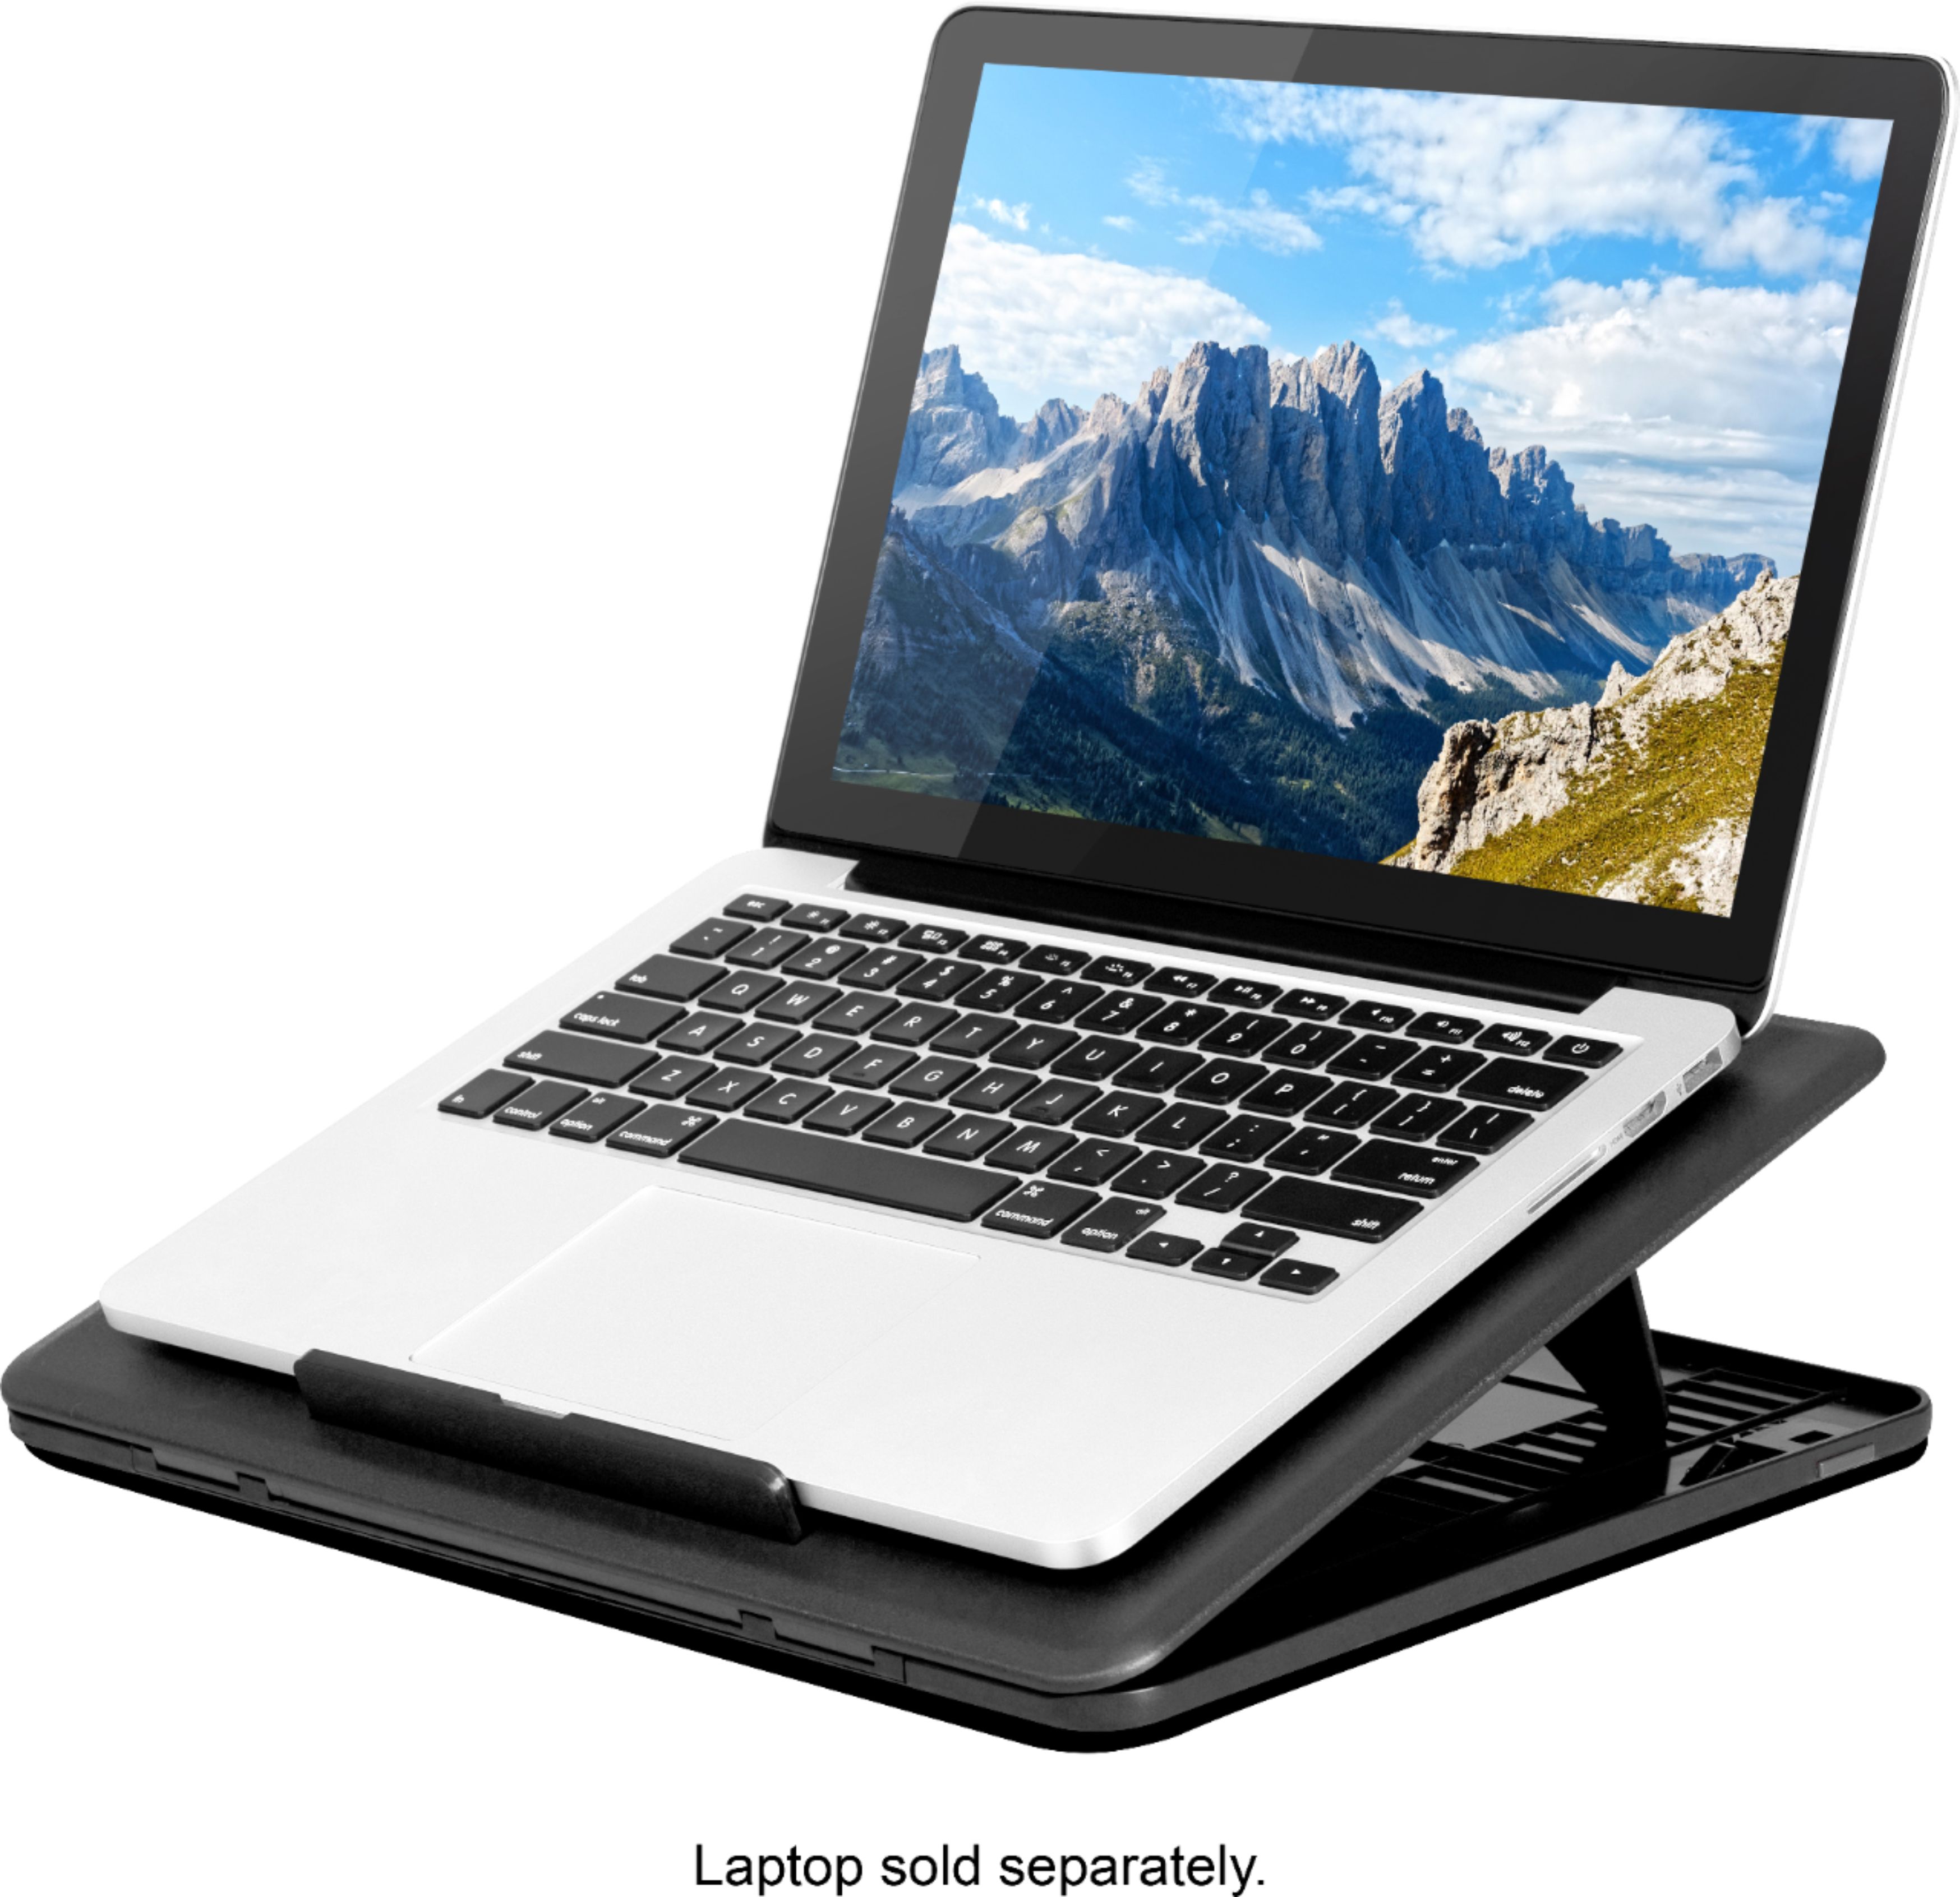 Grifiti Travel Deck Lap Desk for MacBooks Laptops Notebooks, Size: 9 x 12